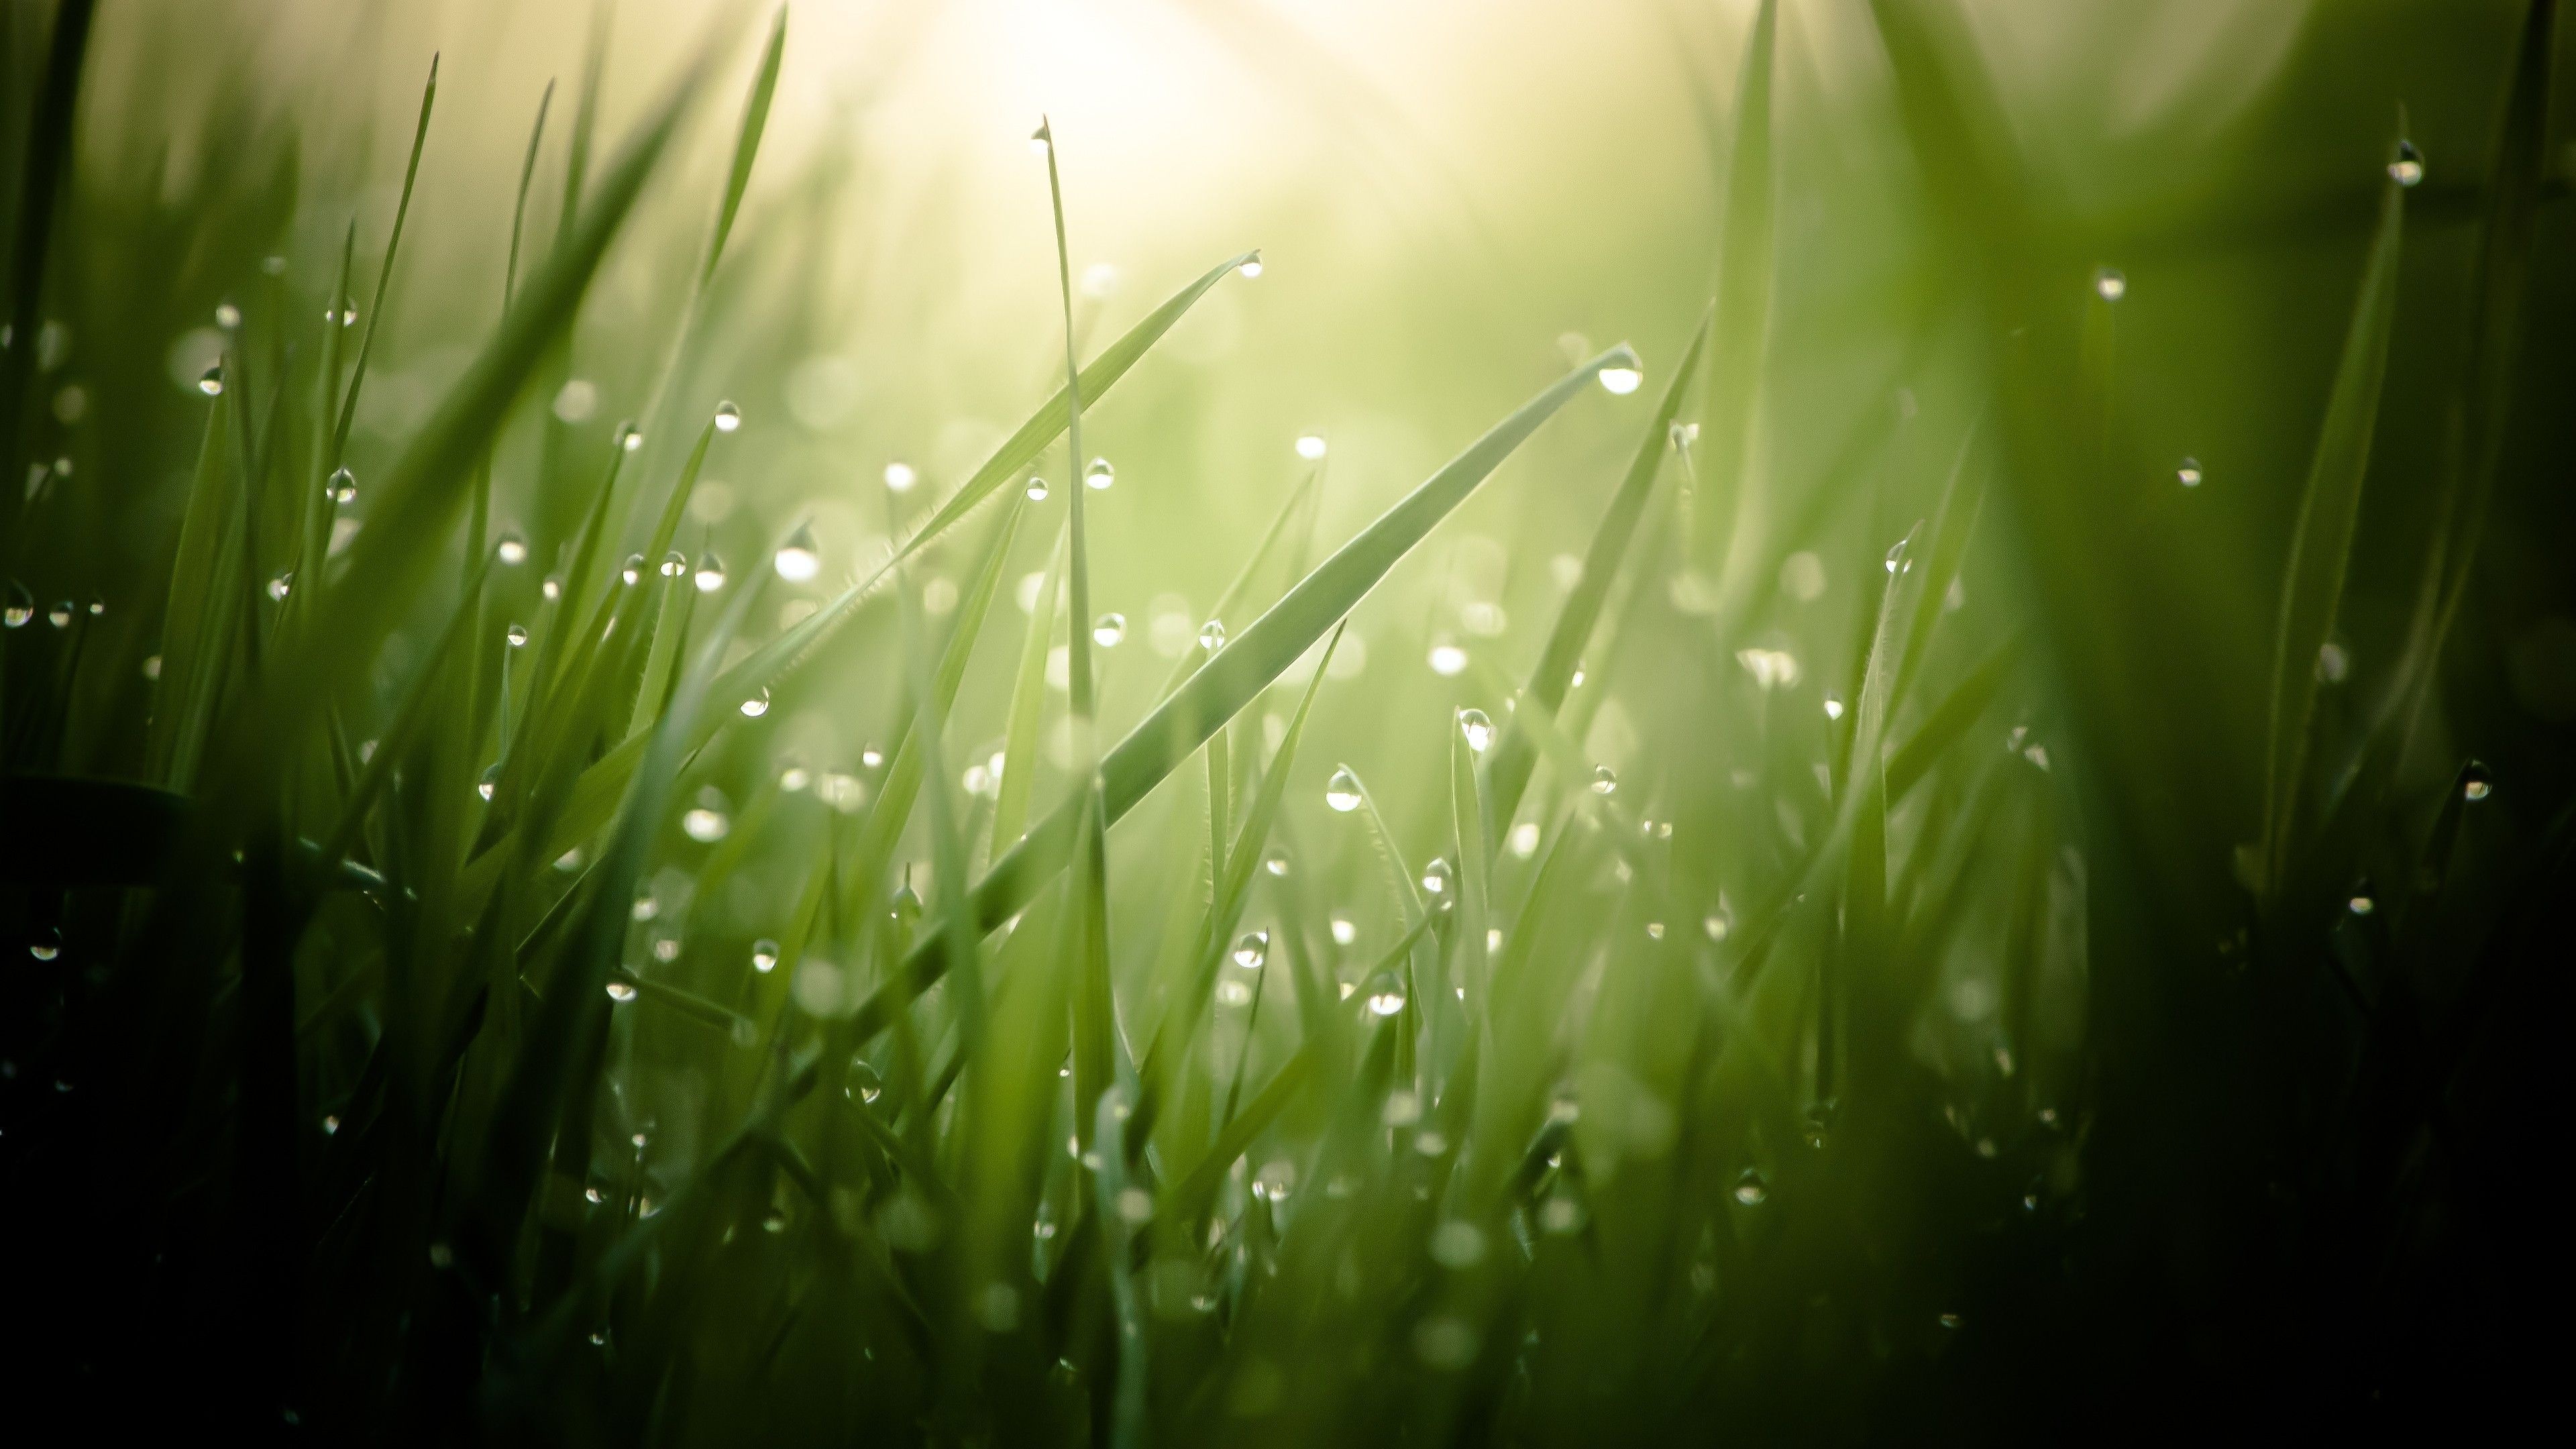 Aesthetic grass, Desktop wallpapers, Serenity and simplicity, Nature's elegance, 3840x2160 4K Desktop